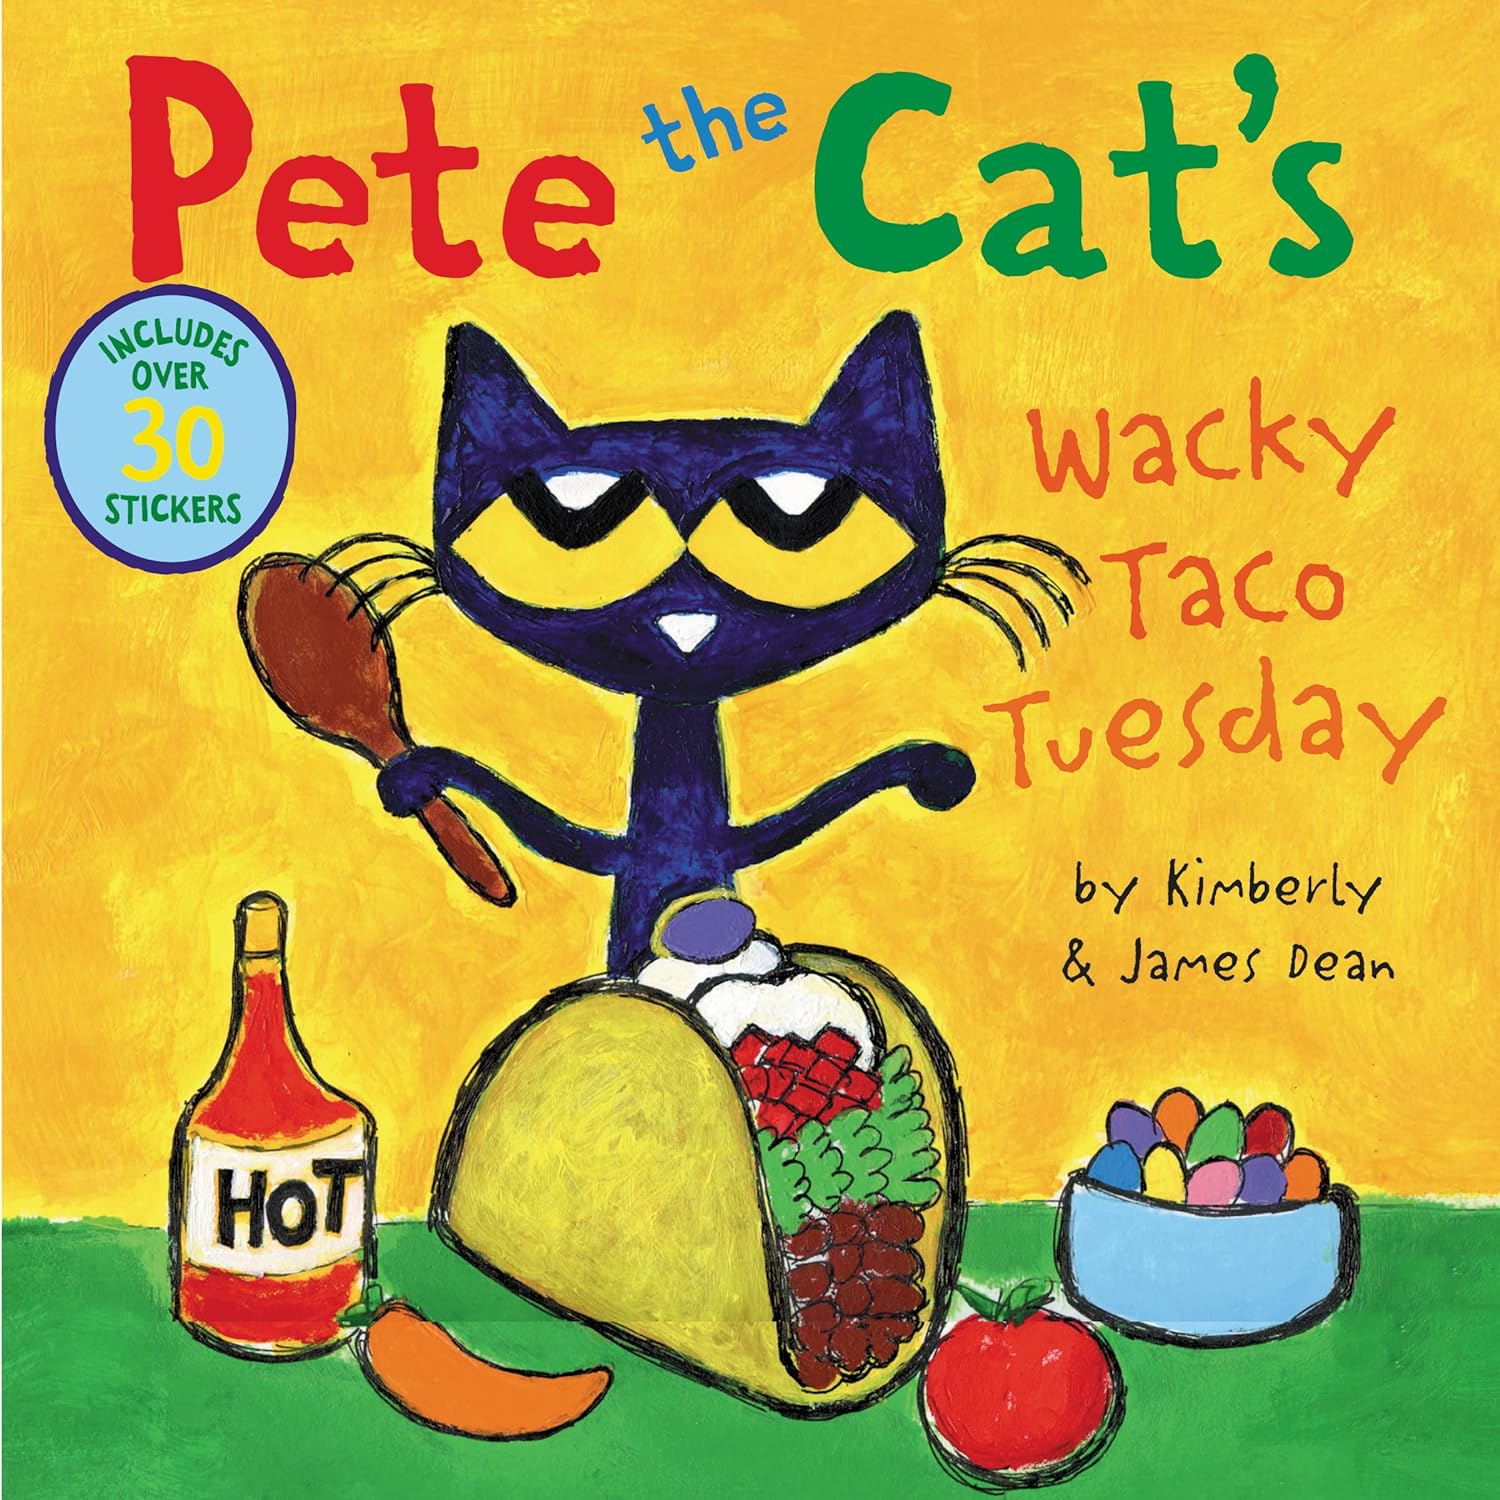 Pete the Cat’s Wacky Taco Tuesday by Kimberly Dean